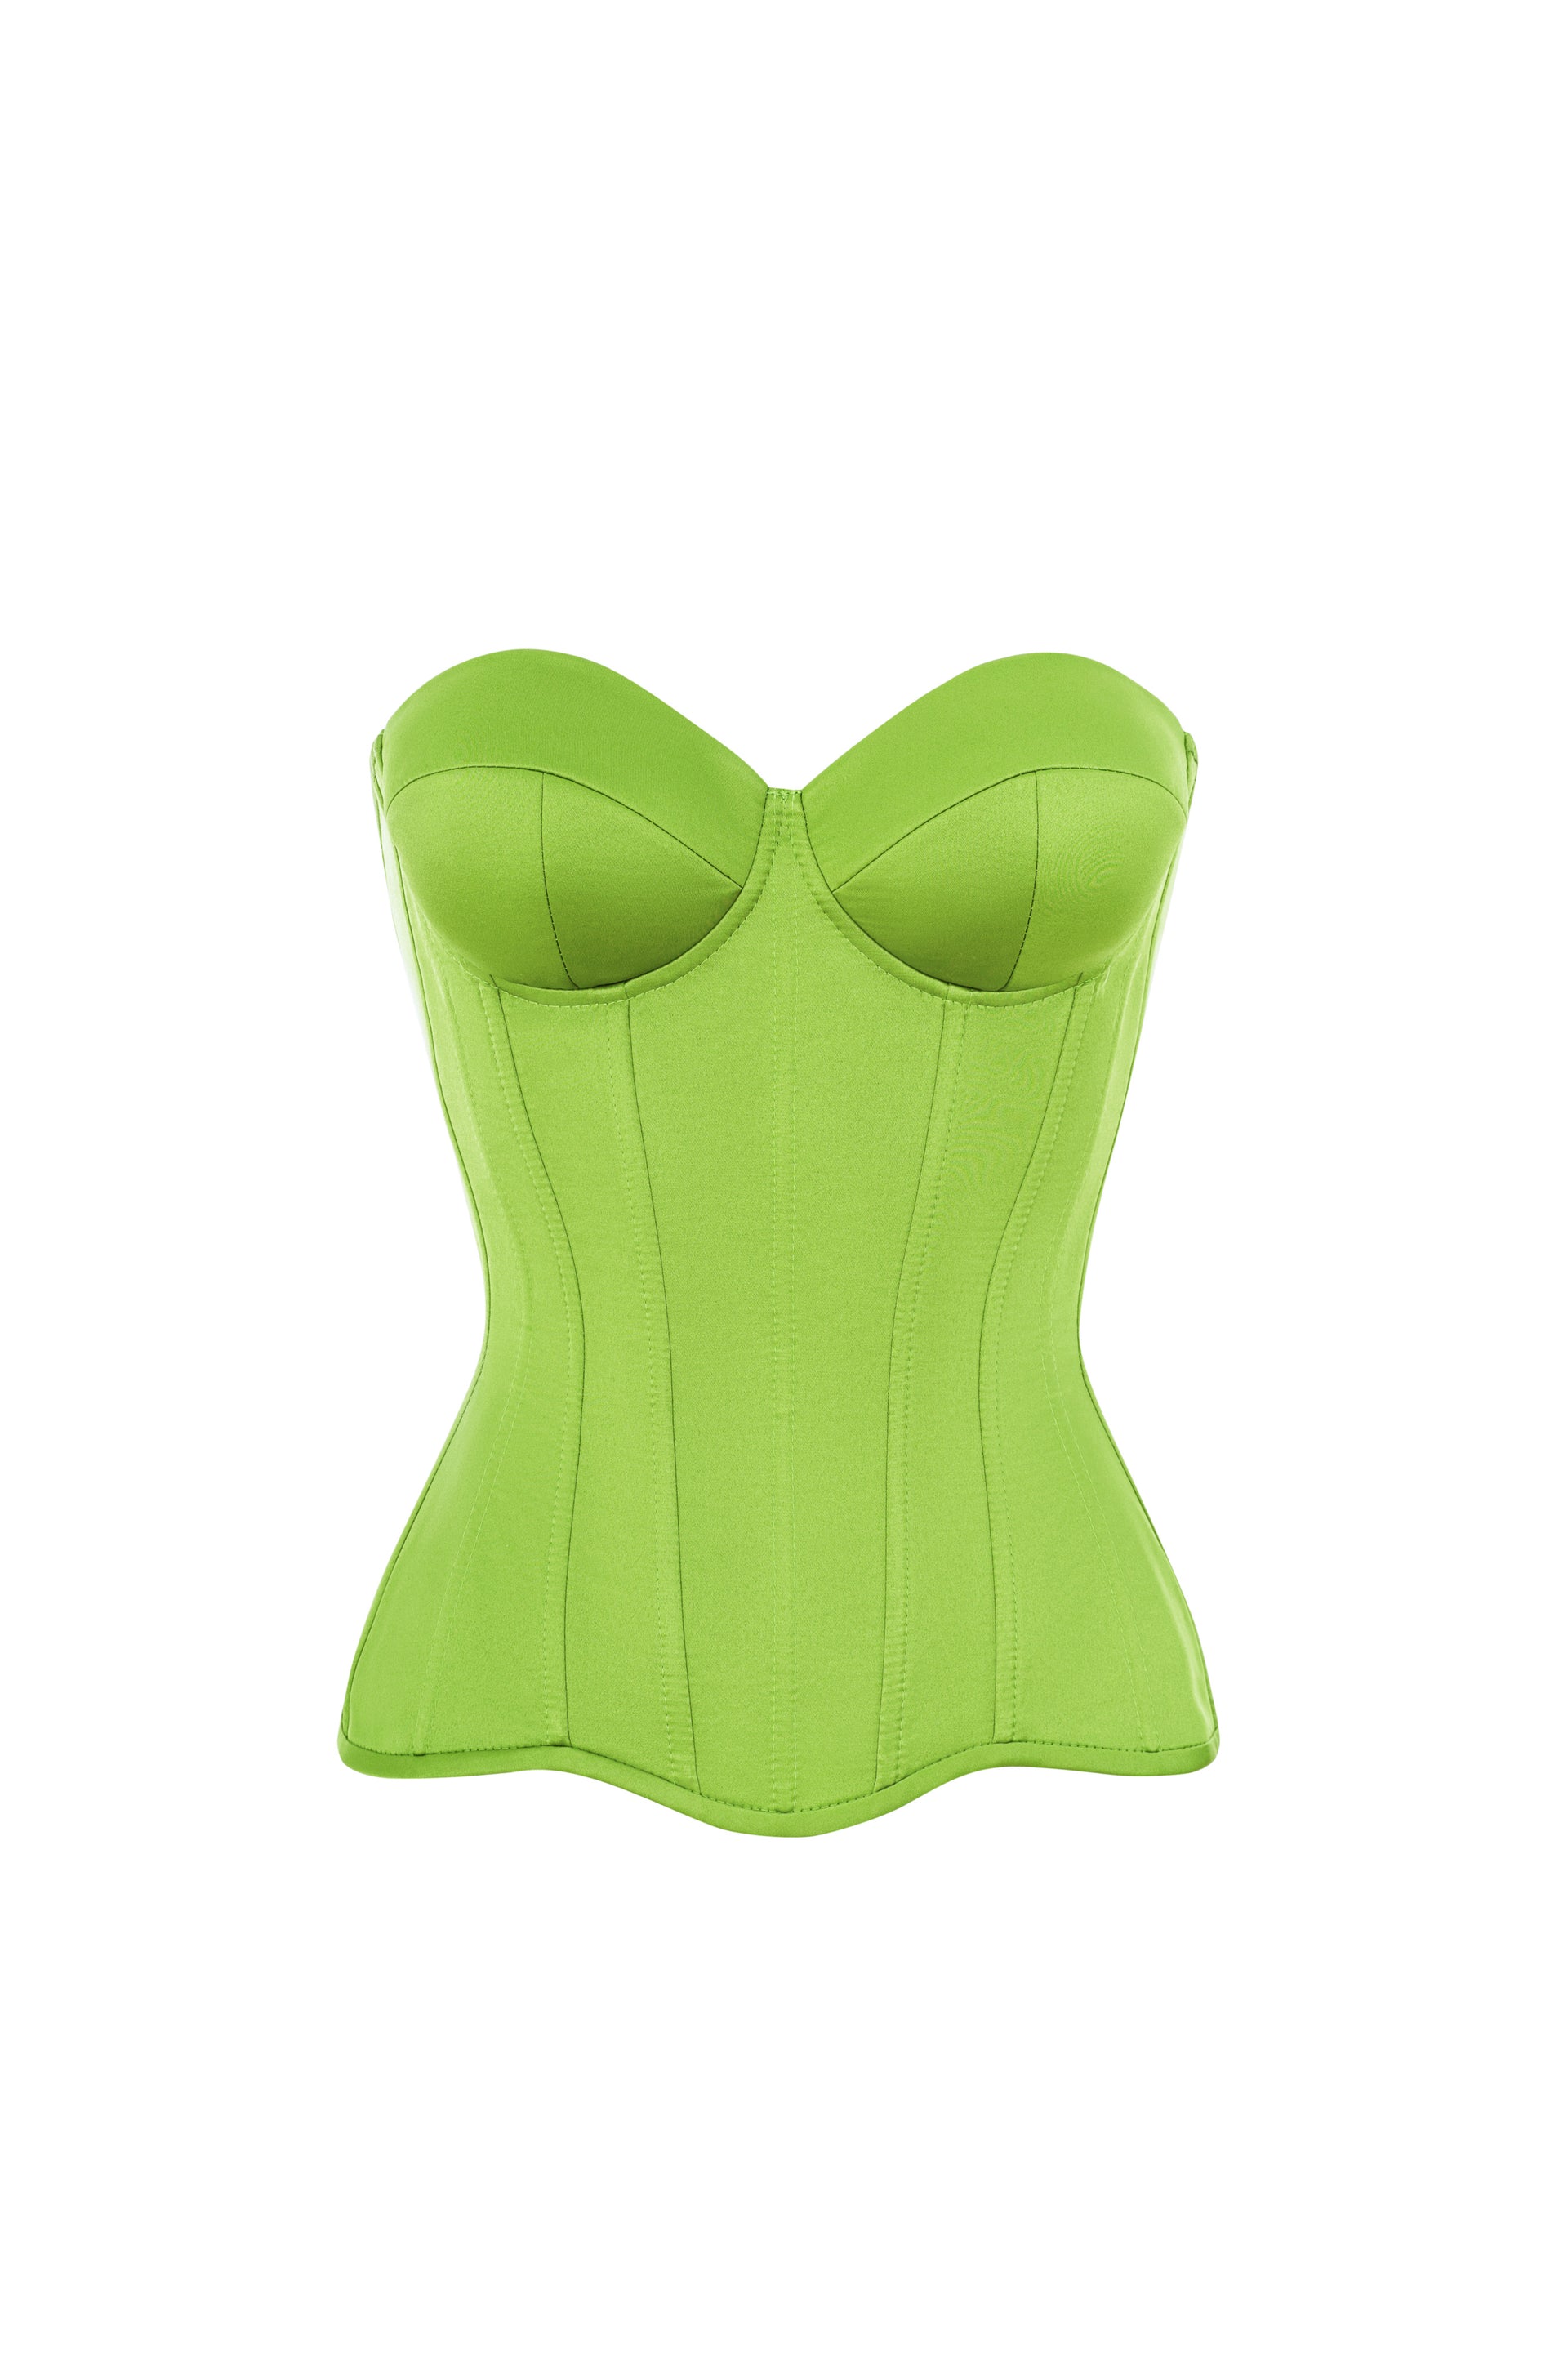 BRAND NEW! Light Green corset size small